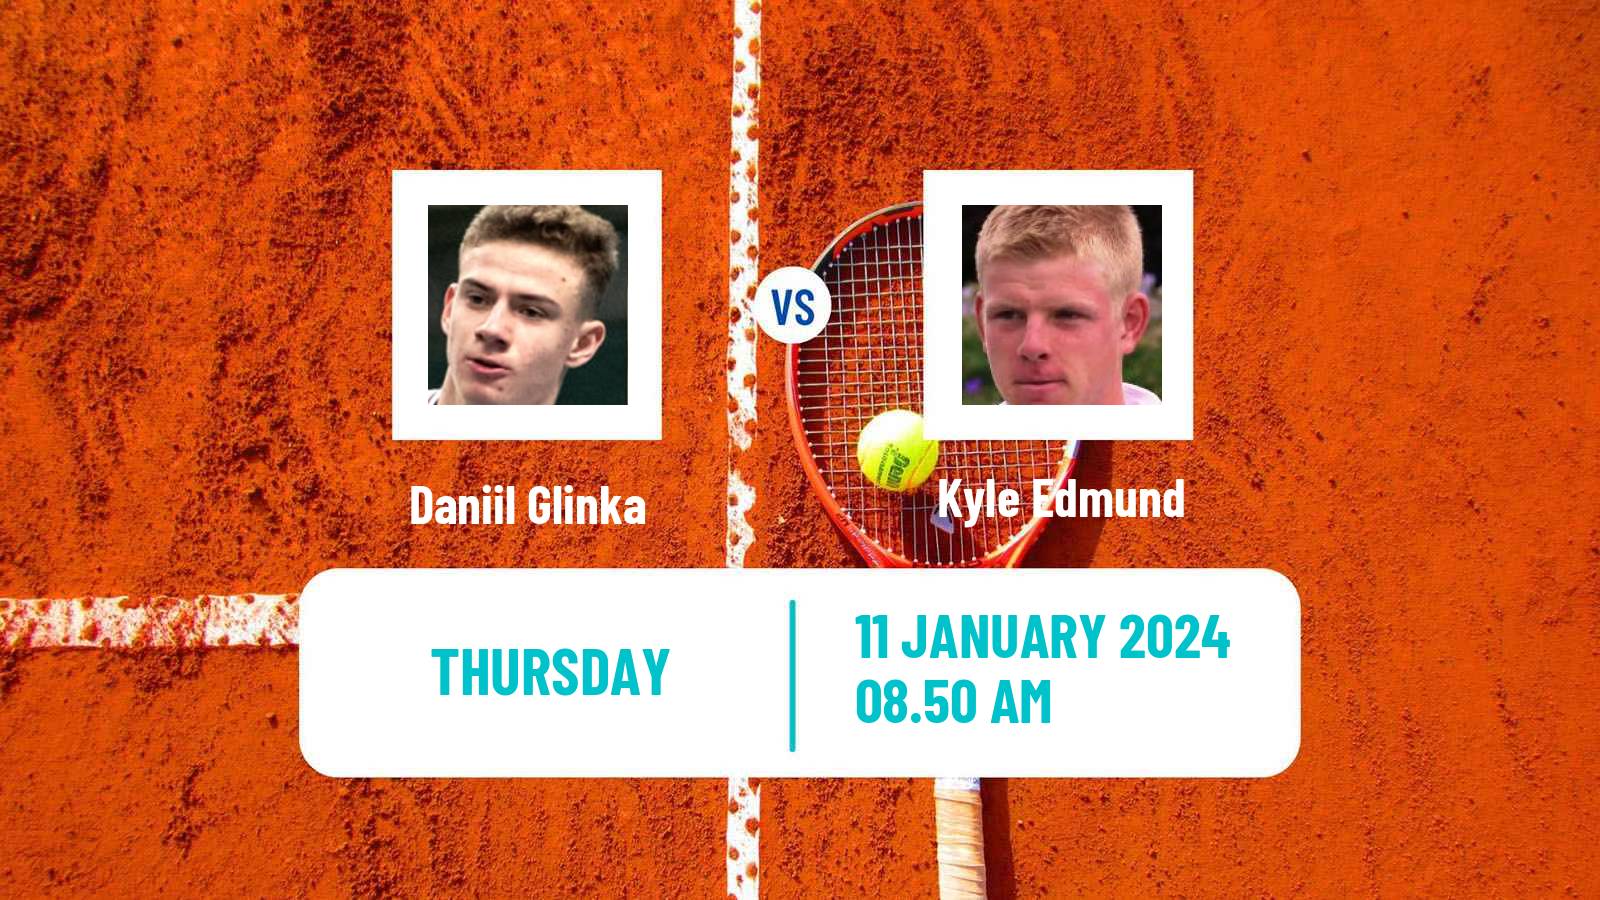 Tennis ITF M25 Loughborough Men Daniil Glinka - Kyle Edmund